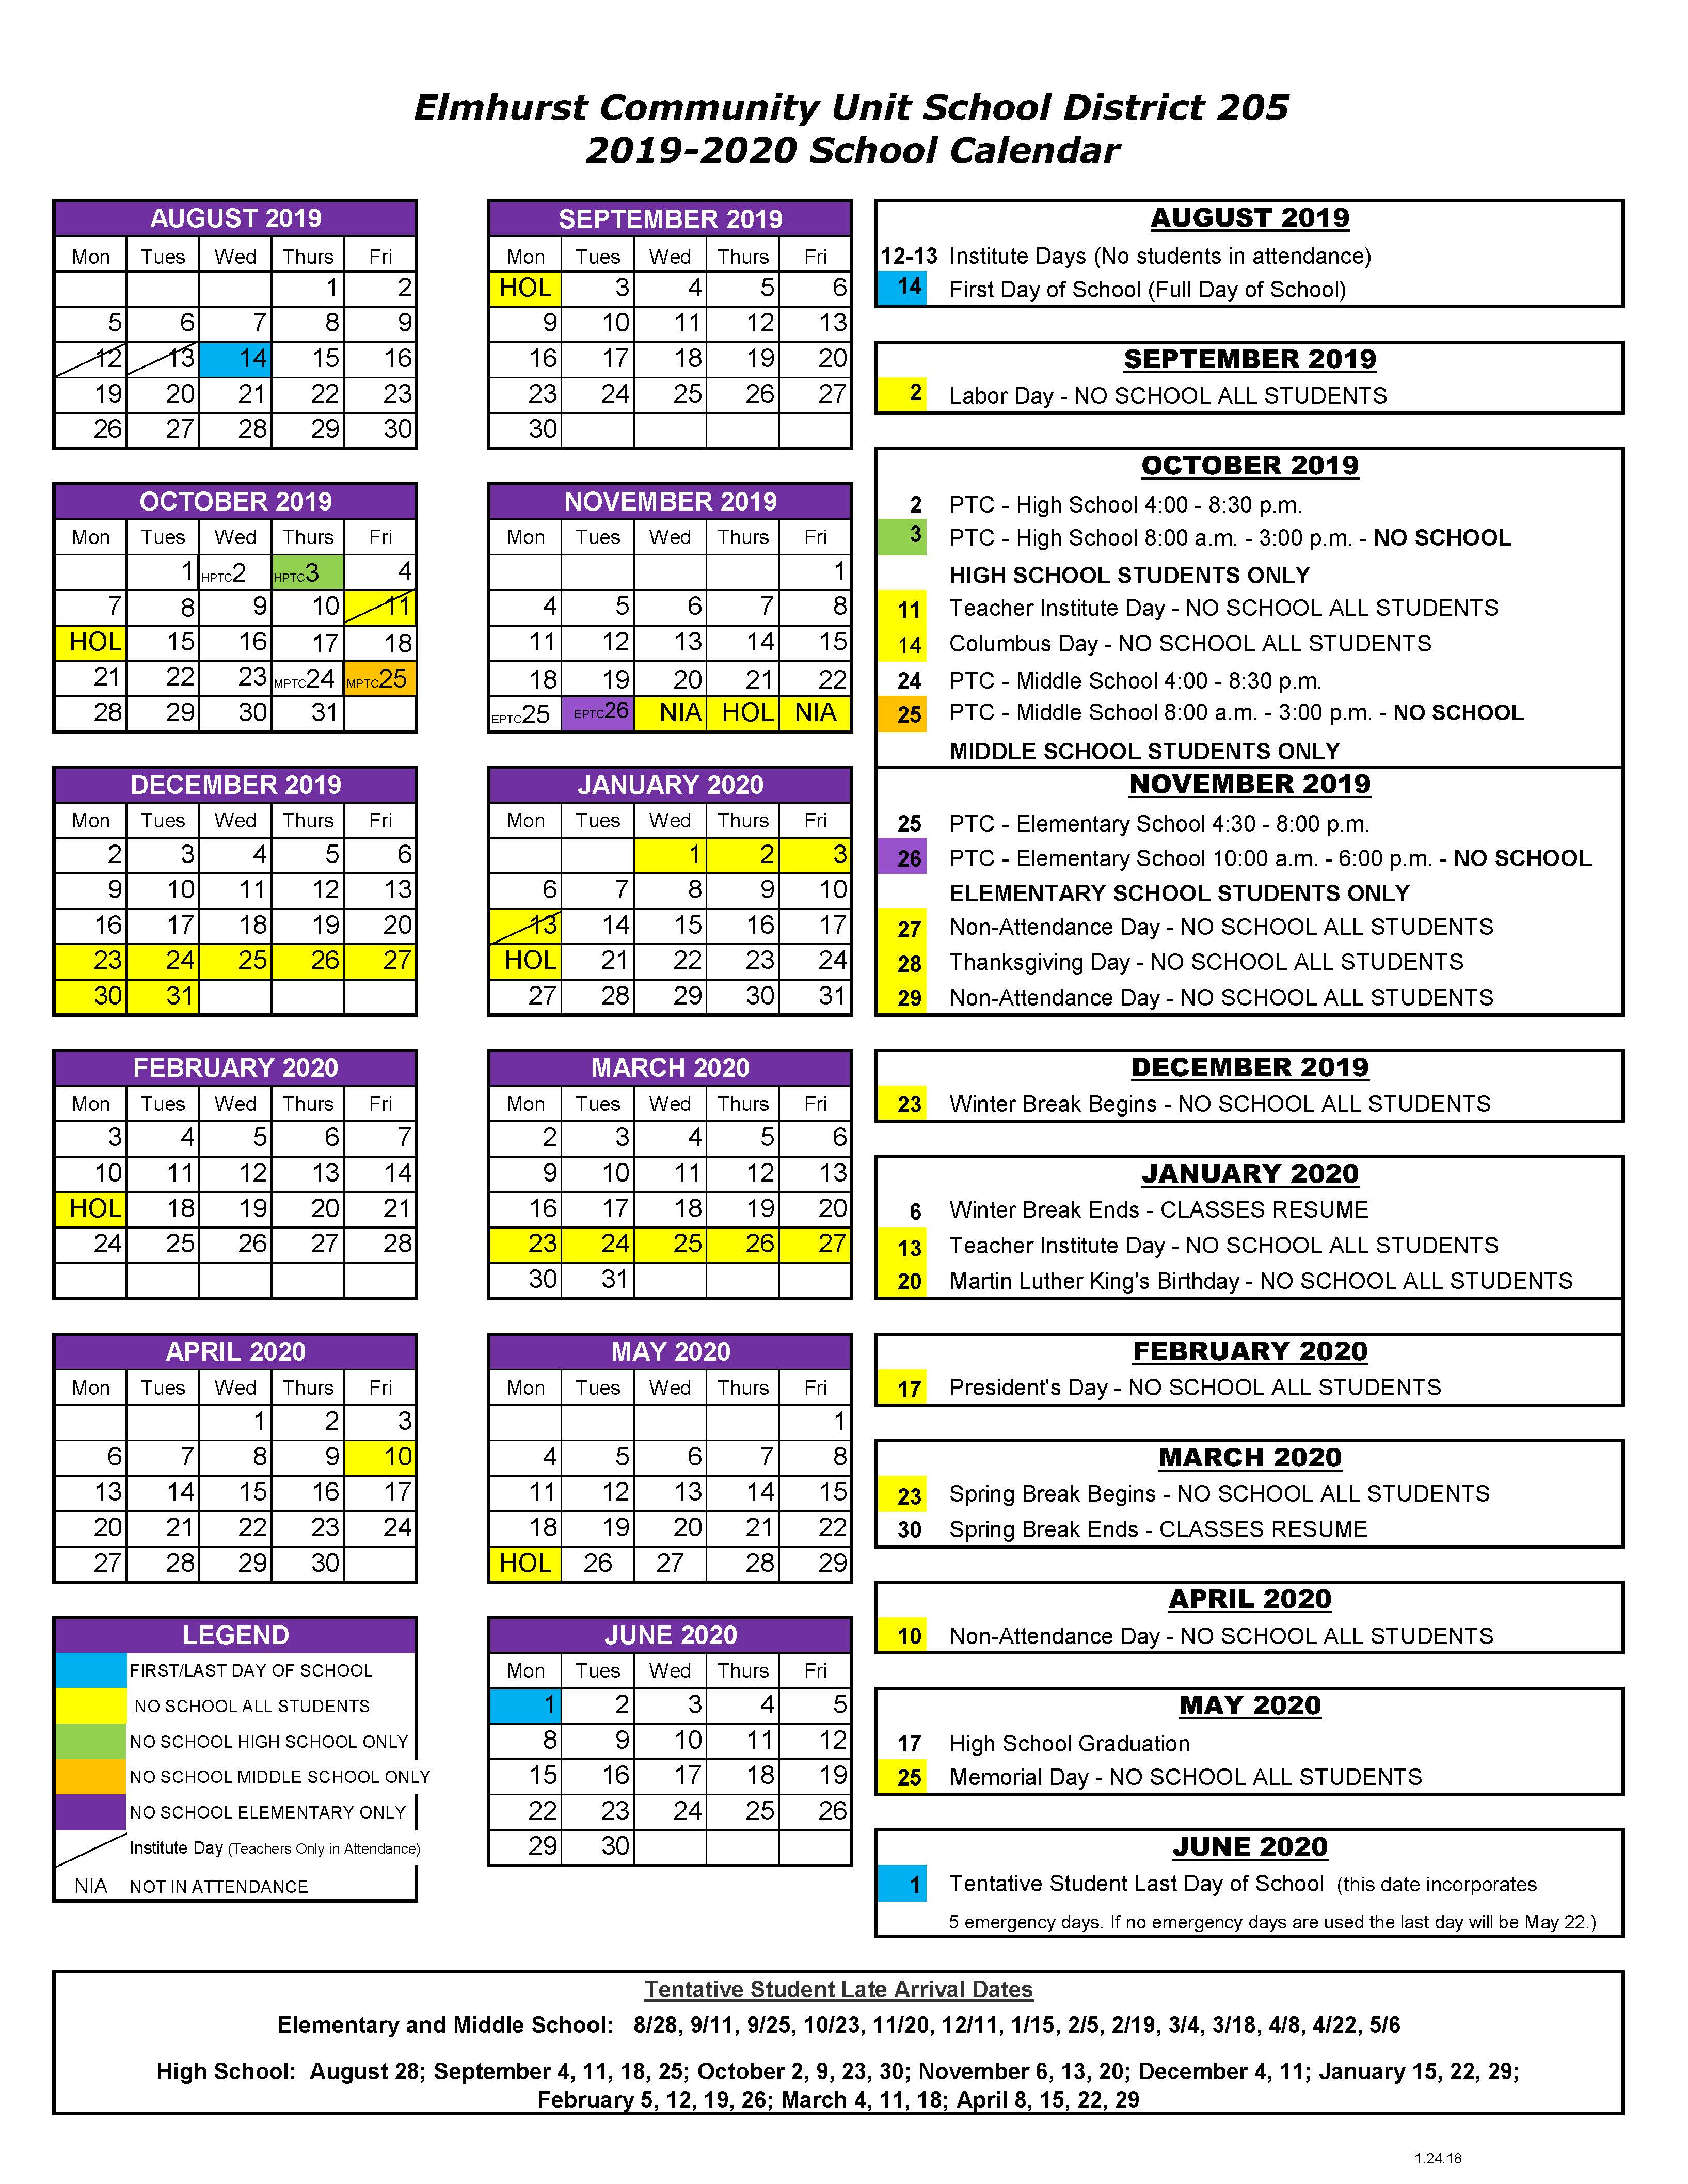 Elmhurst Community Unit School District 205 Calendar 2020 and 2021